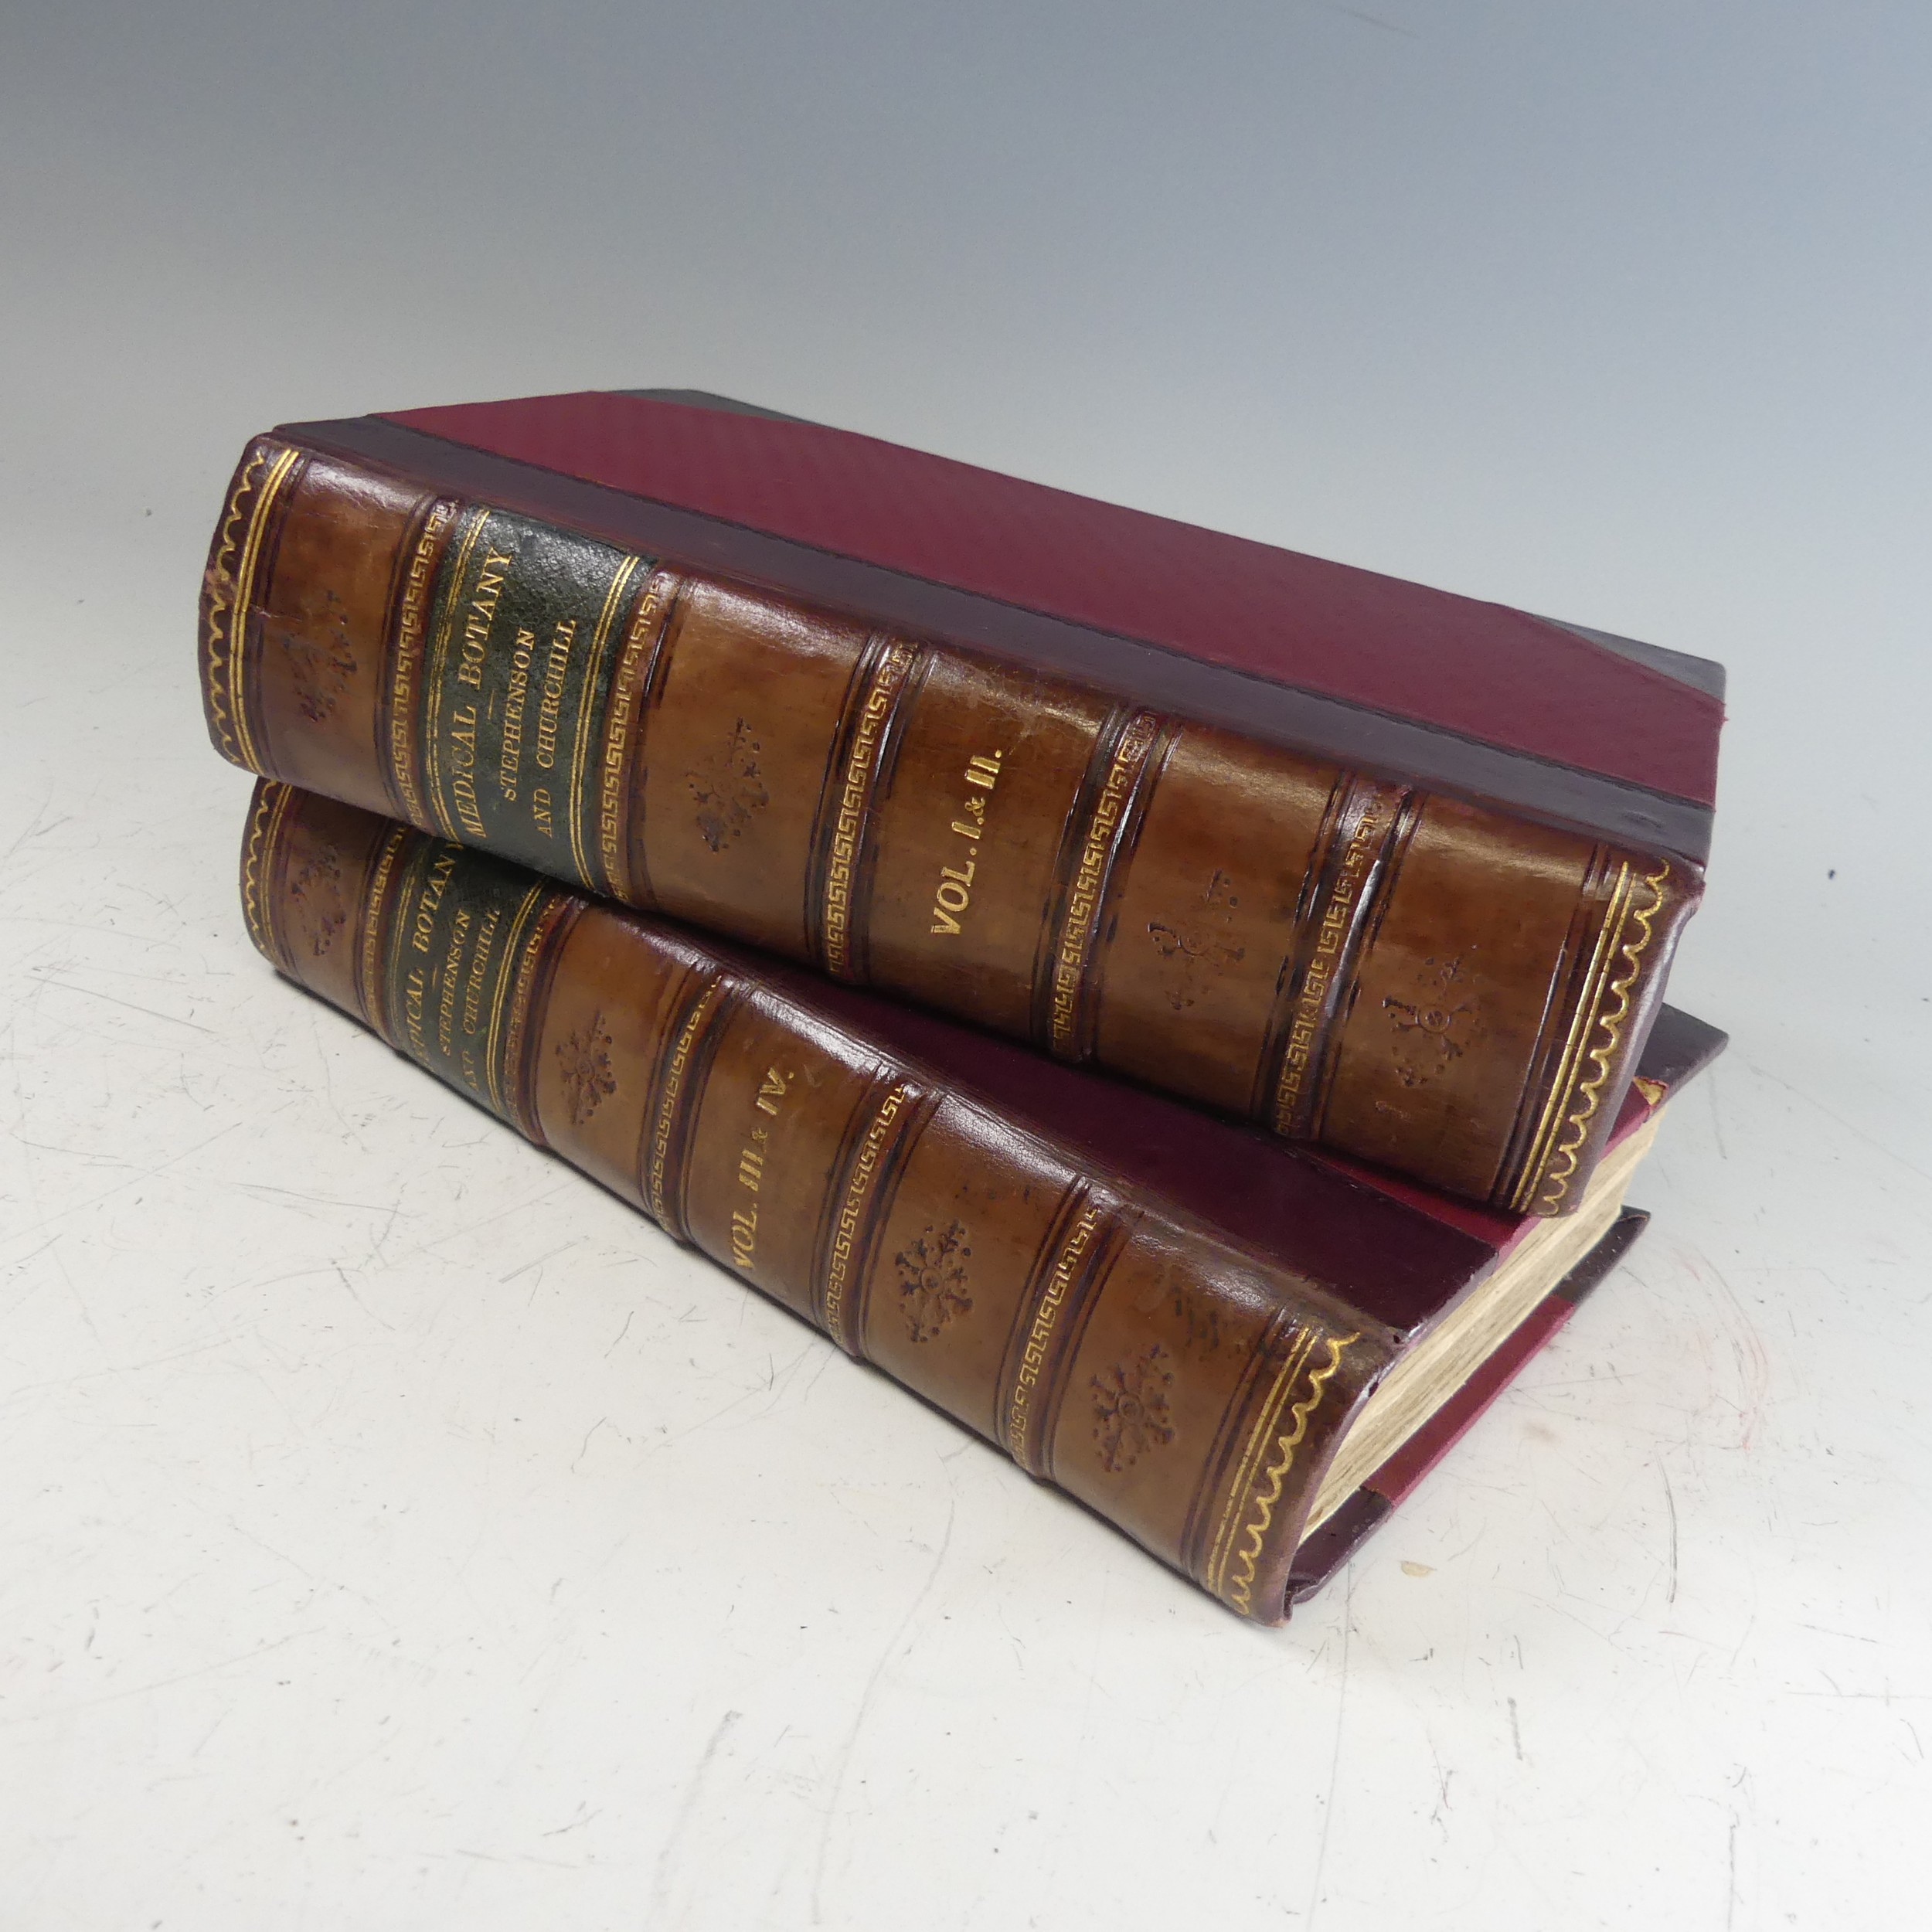 Stephenson (John) and Churchill (James Morss); 'Medical Botany: or Illustrations and Descriptions of